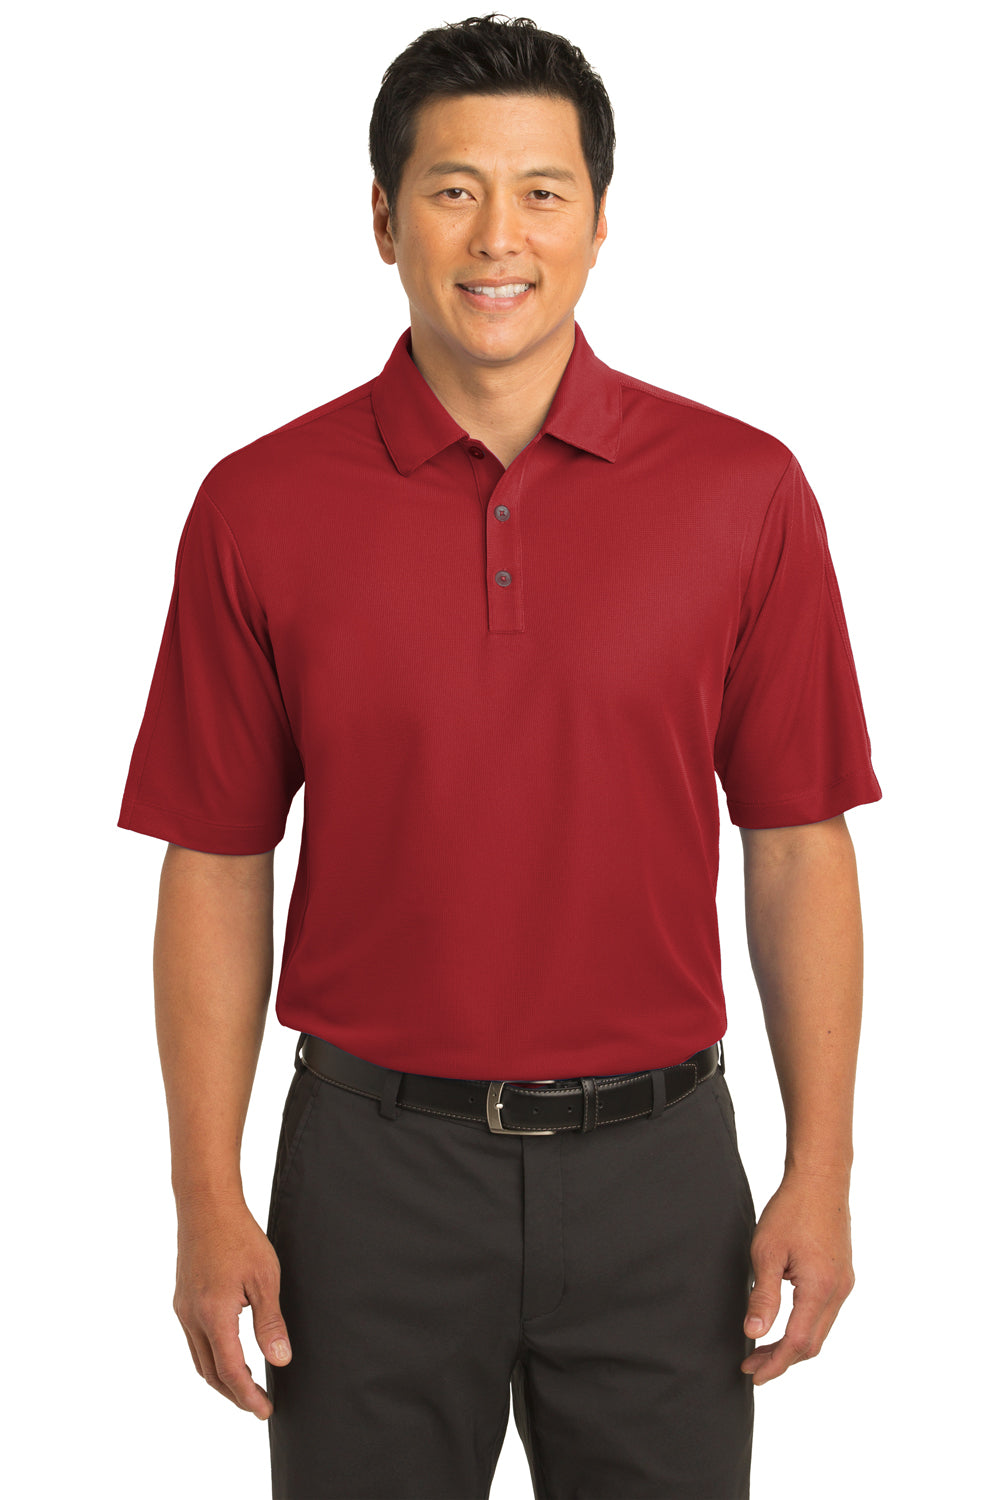 Nike 266998 Mens Tech Sport Dri-Fit Moisture Wicking Short Sleeve Polo Shirt Team Red Model Front